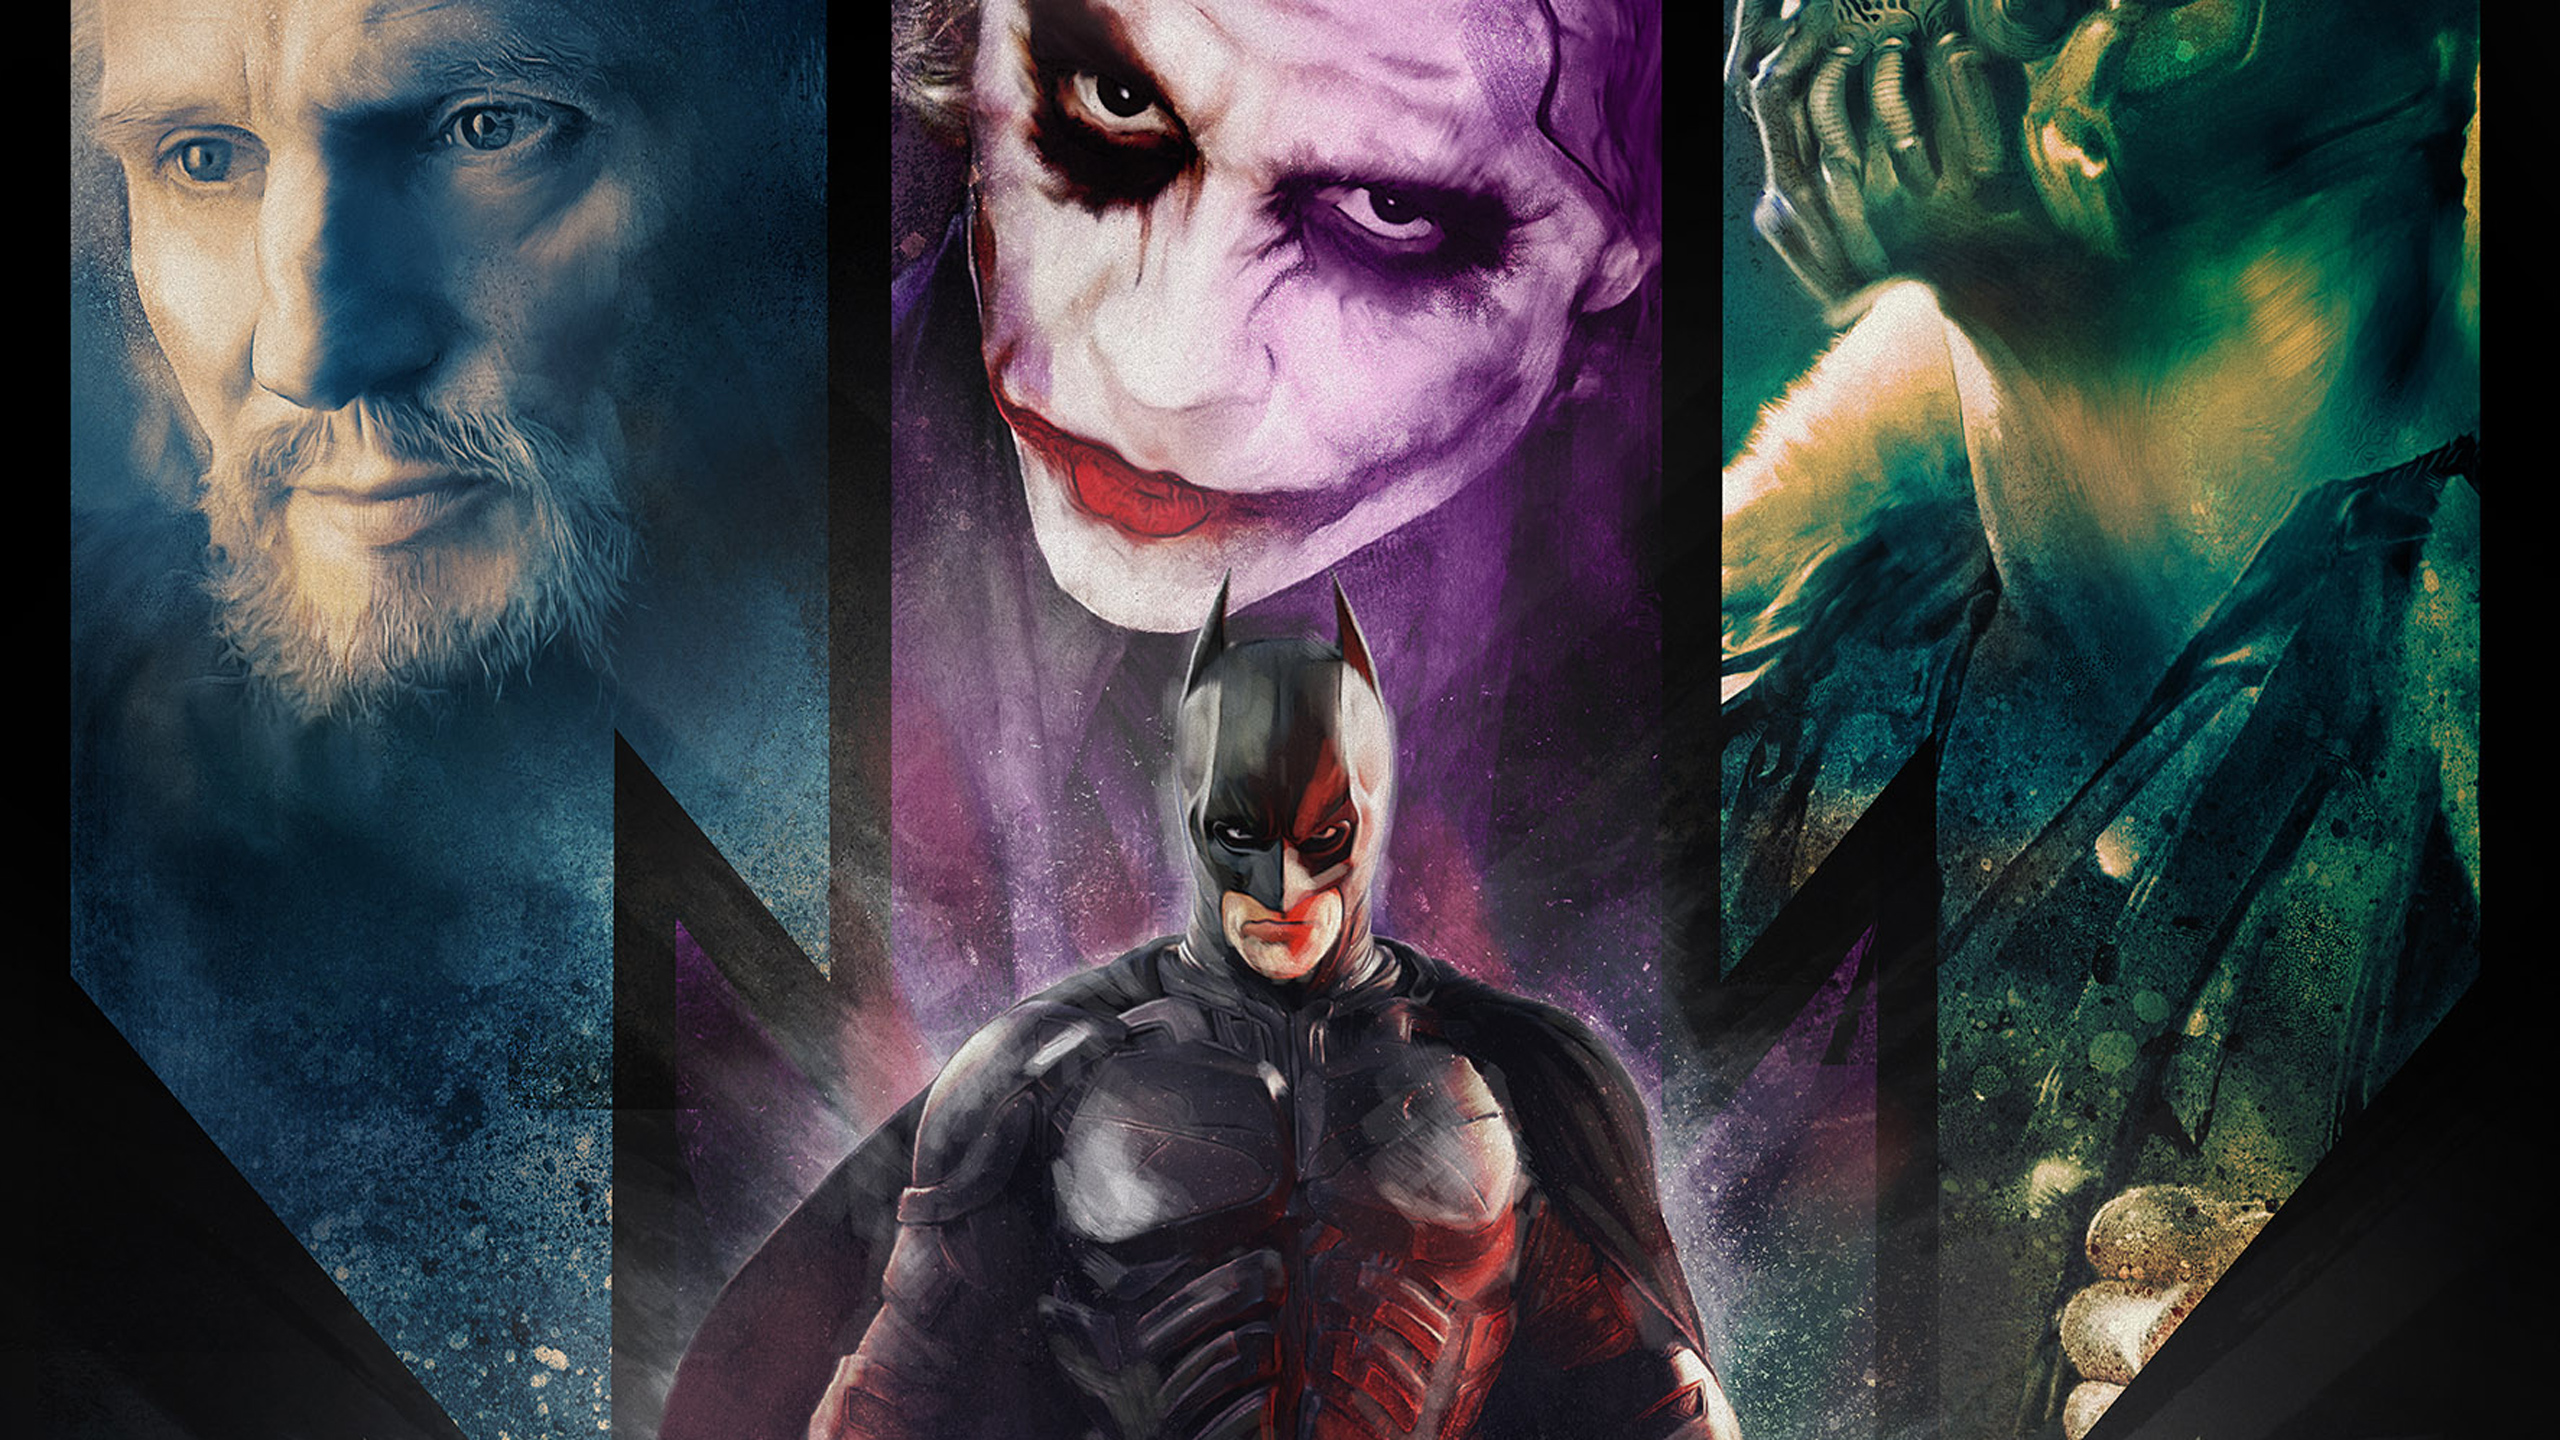 Movies Batman Begins The Dark Knight The Dark Knight Rises Collage Ras Al Ghul Joker Bane Batman Her 2560x1440